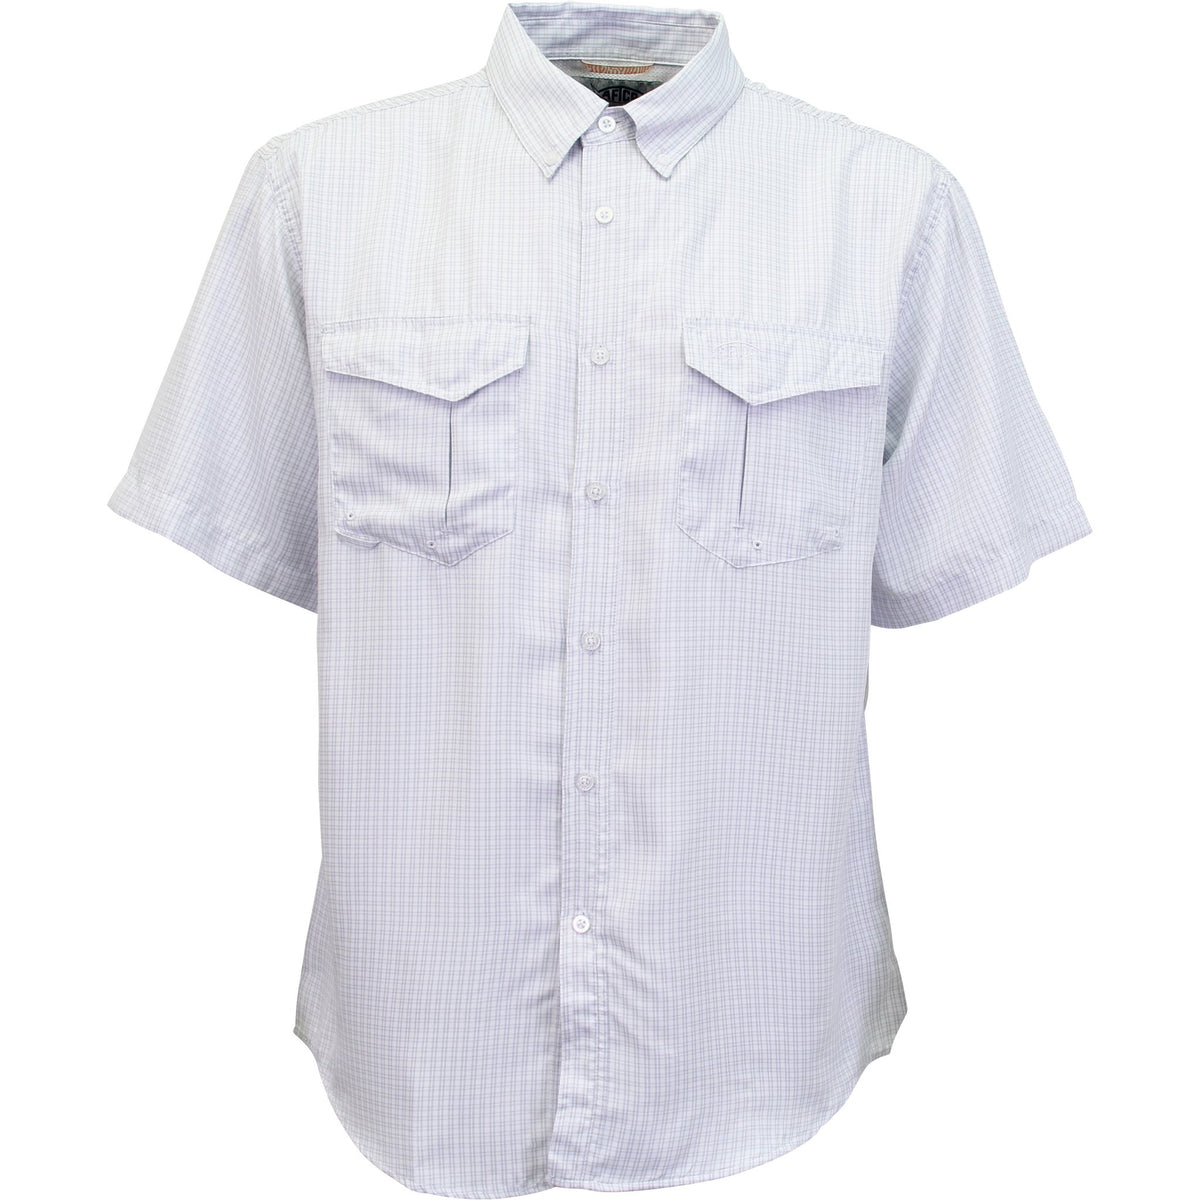 Aftco Men Sirius Short Sleeve Shirt